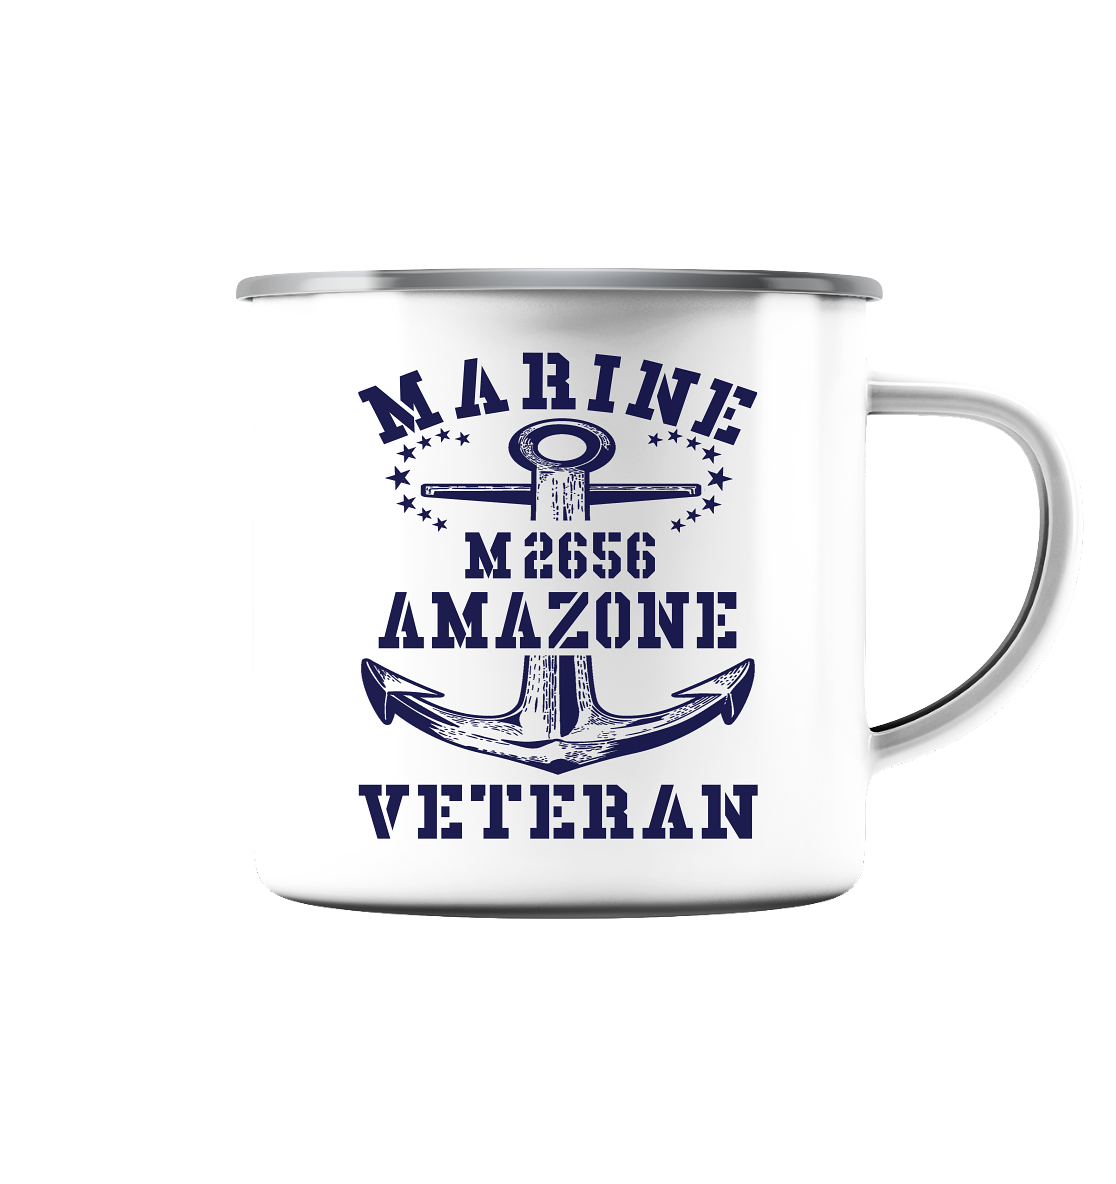 BiMi M2656 AMAZONE Marine Veteran - Emaille Tasse (Silber)